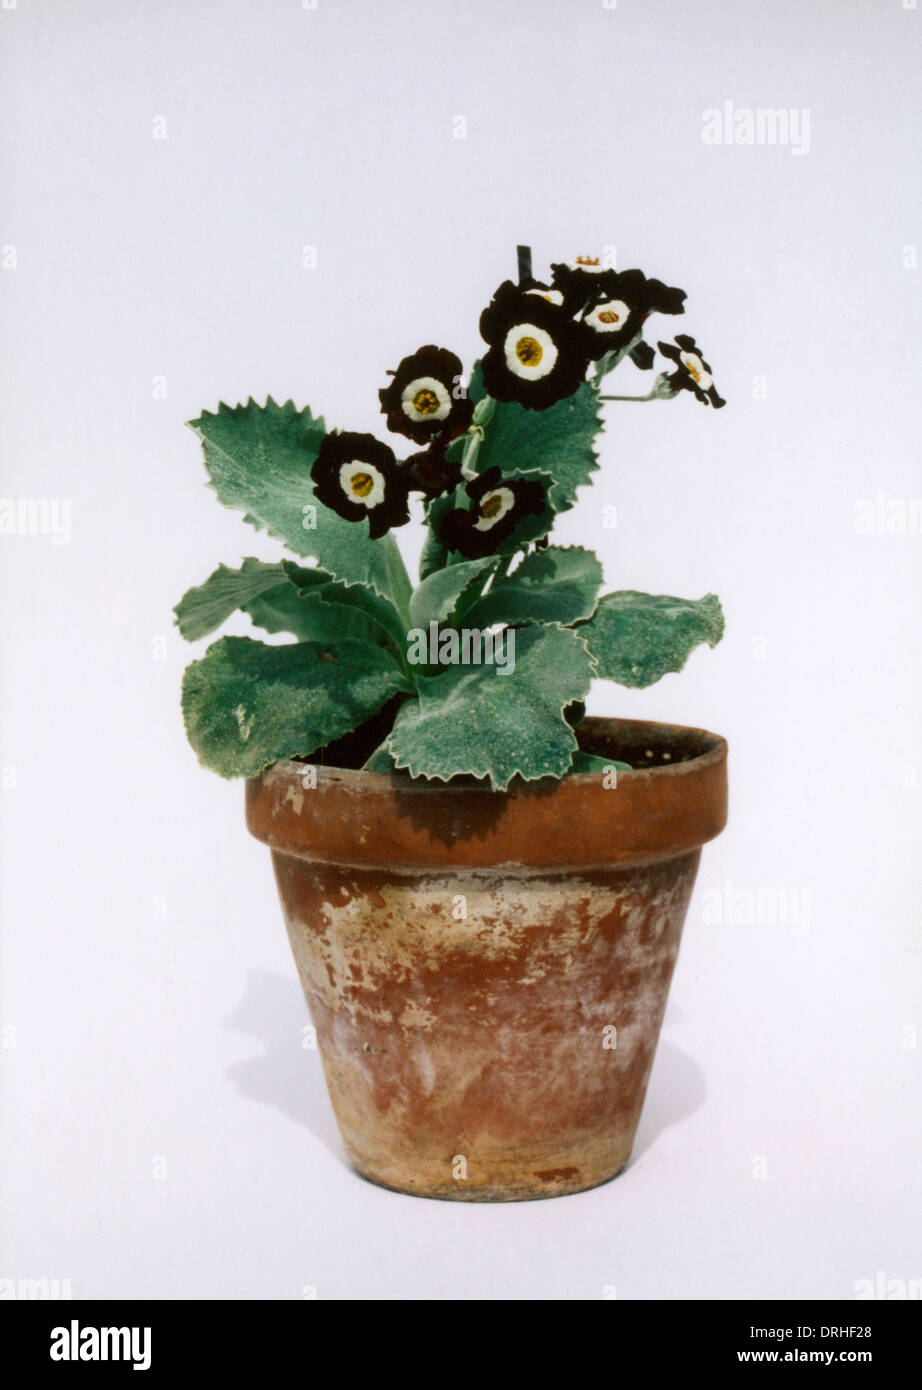 Primula Auricula 'Hardy Amies' Stock Photo